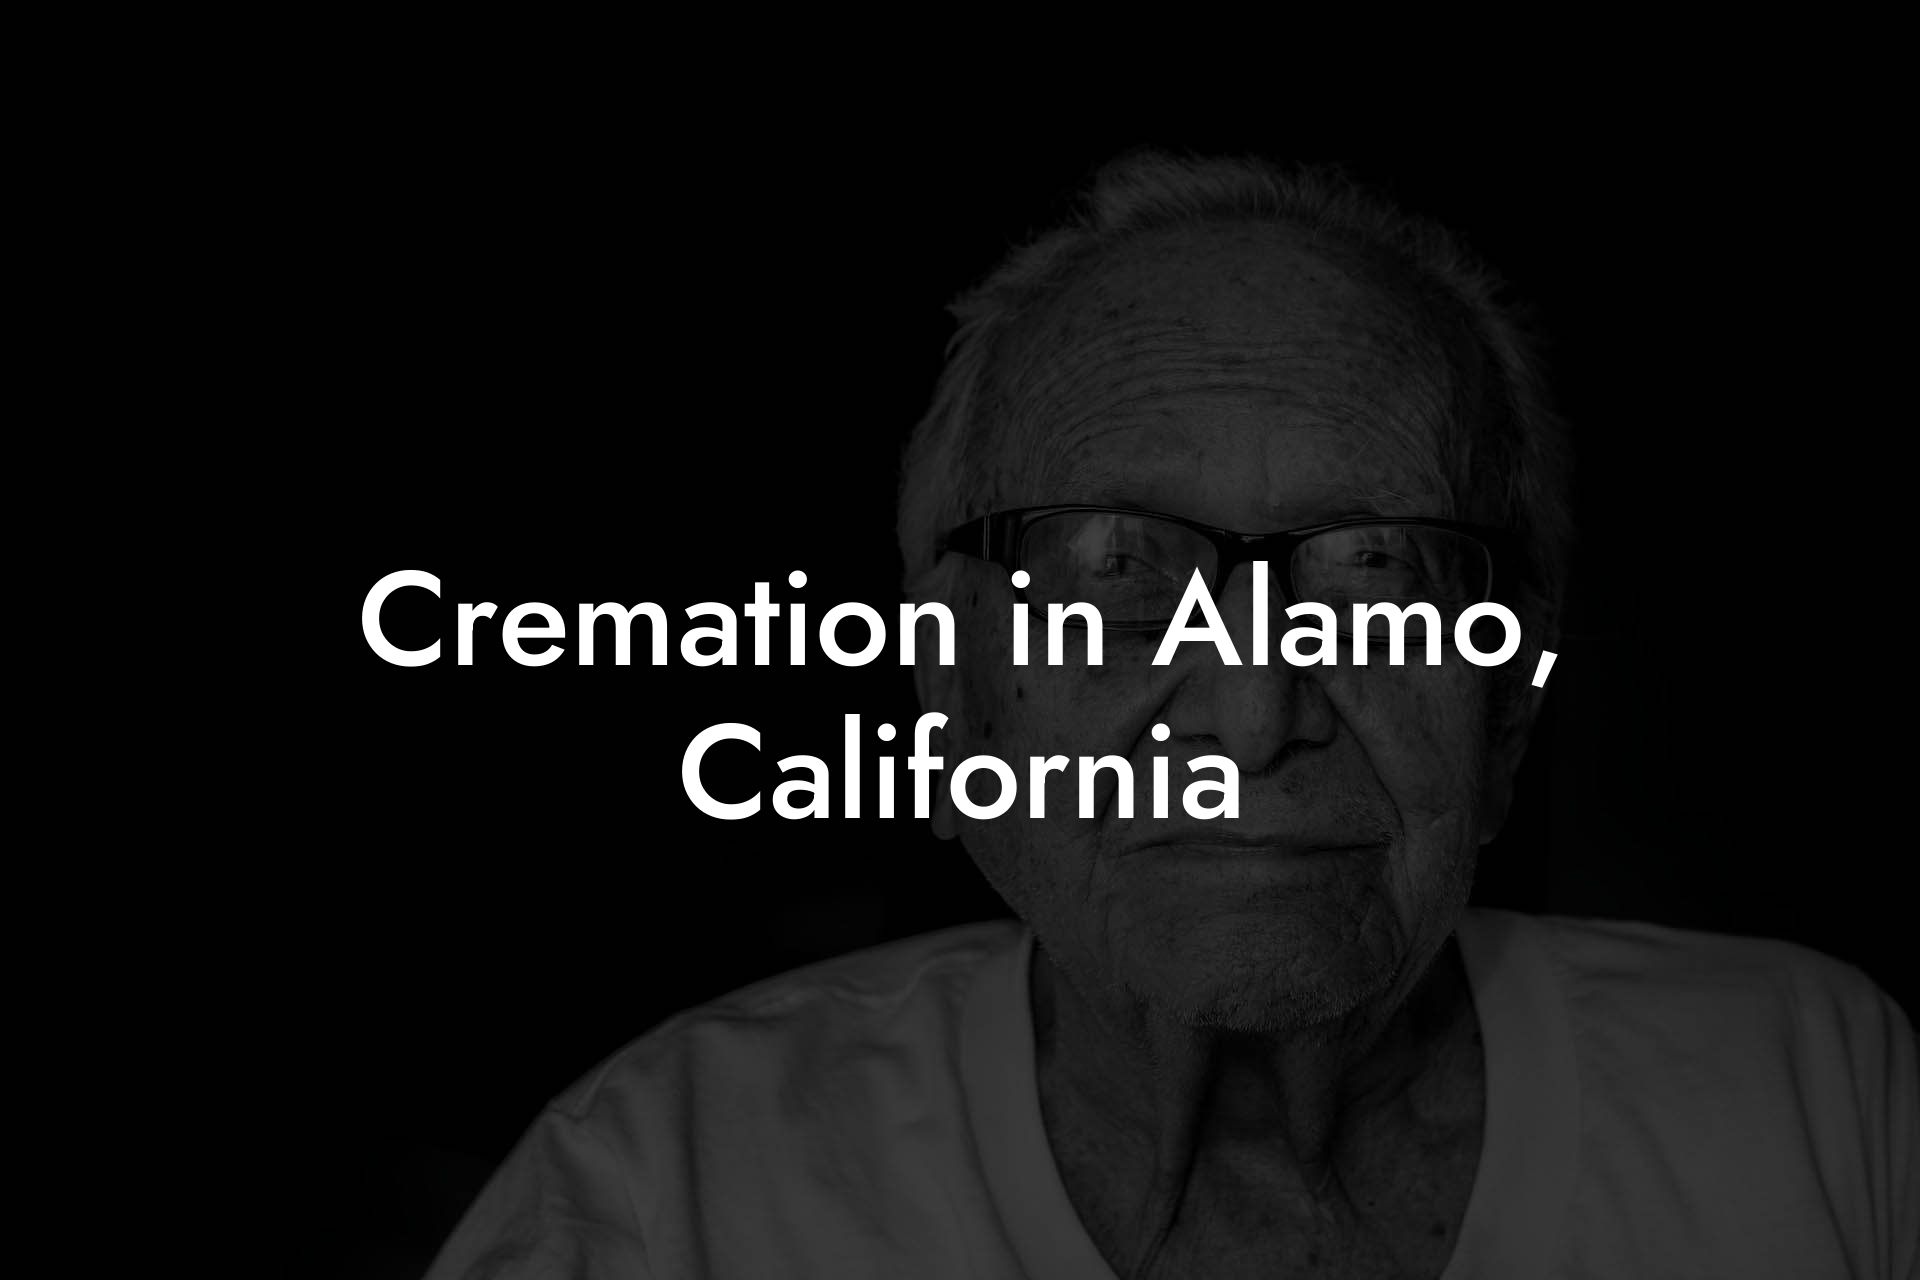 Cremation in Alamo, California